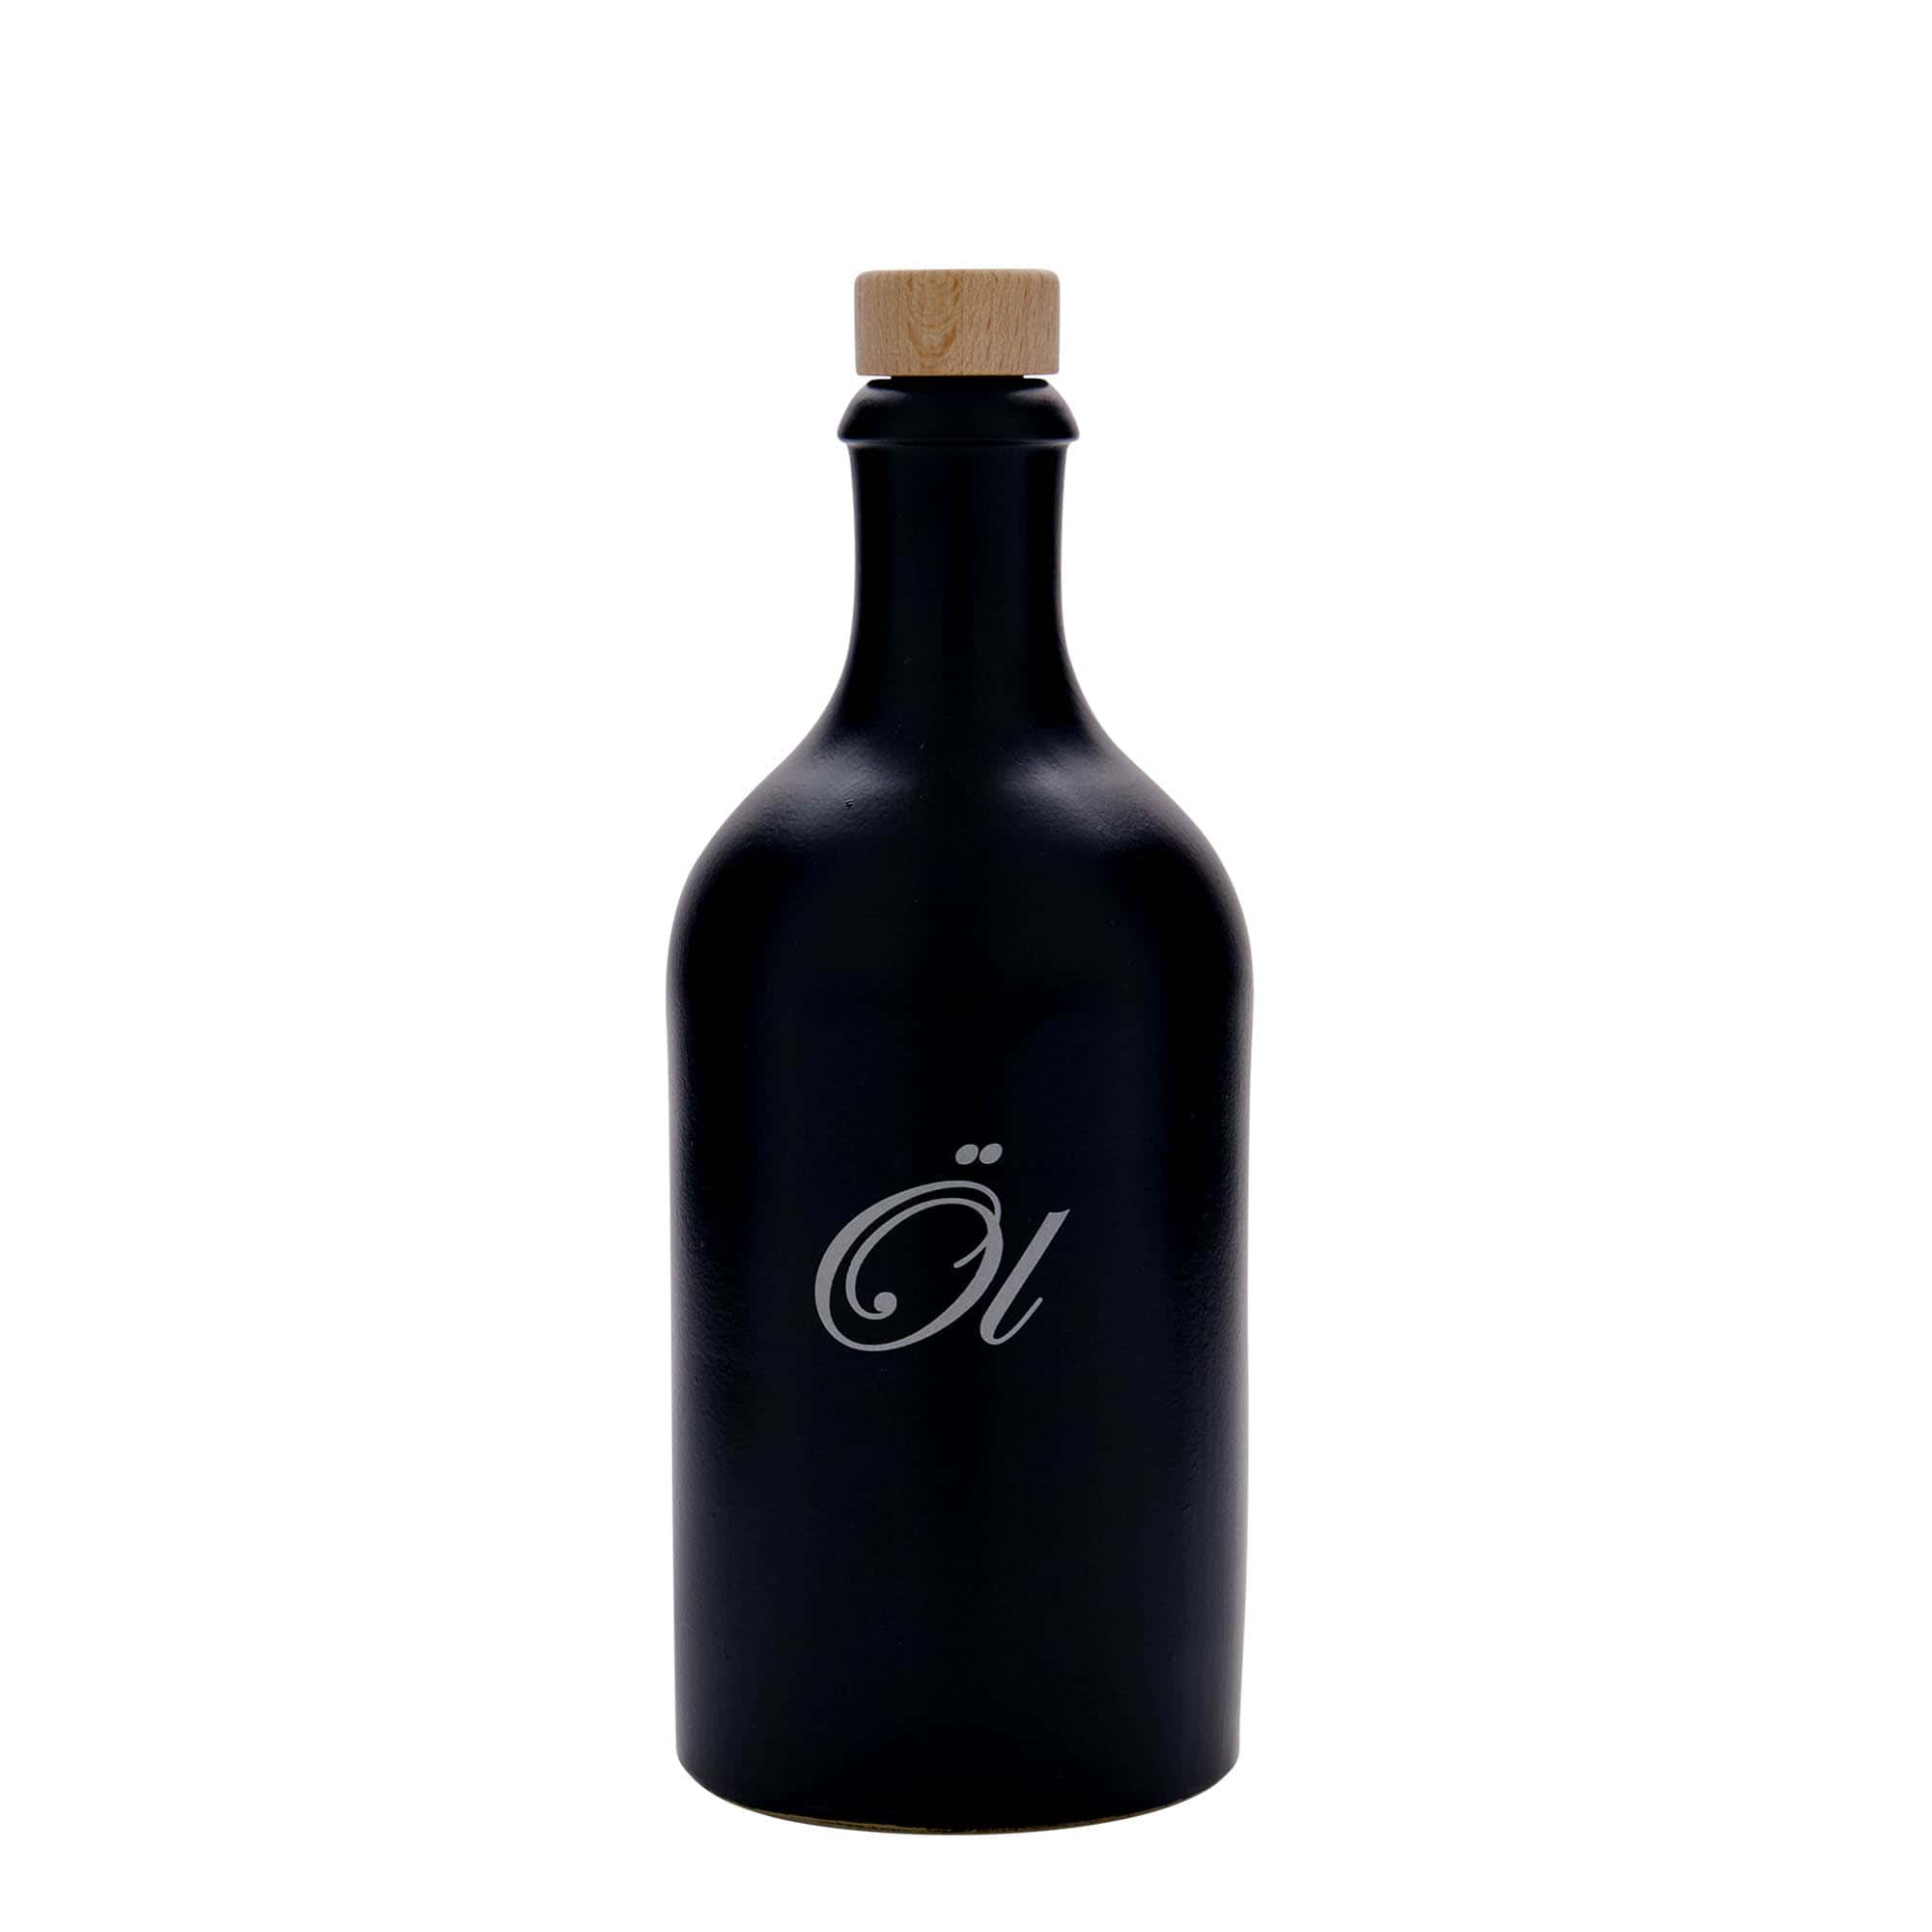 500 ml earthen jug, print: oil, stoneware, black, closure: cork